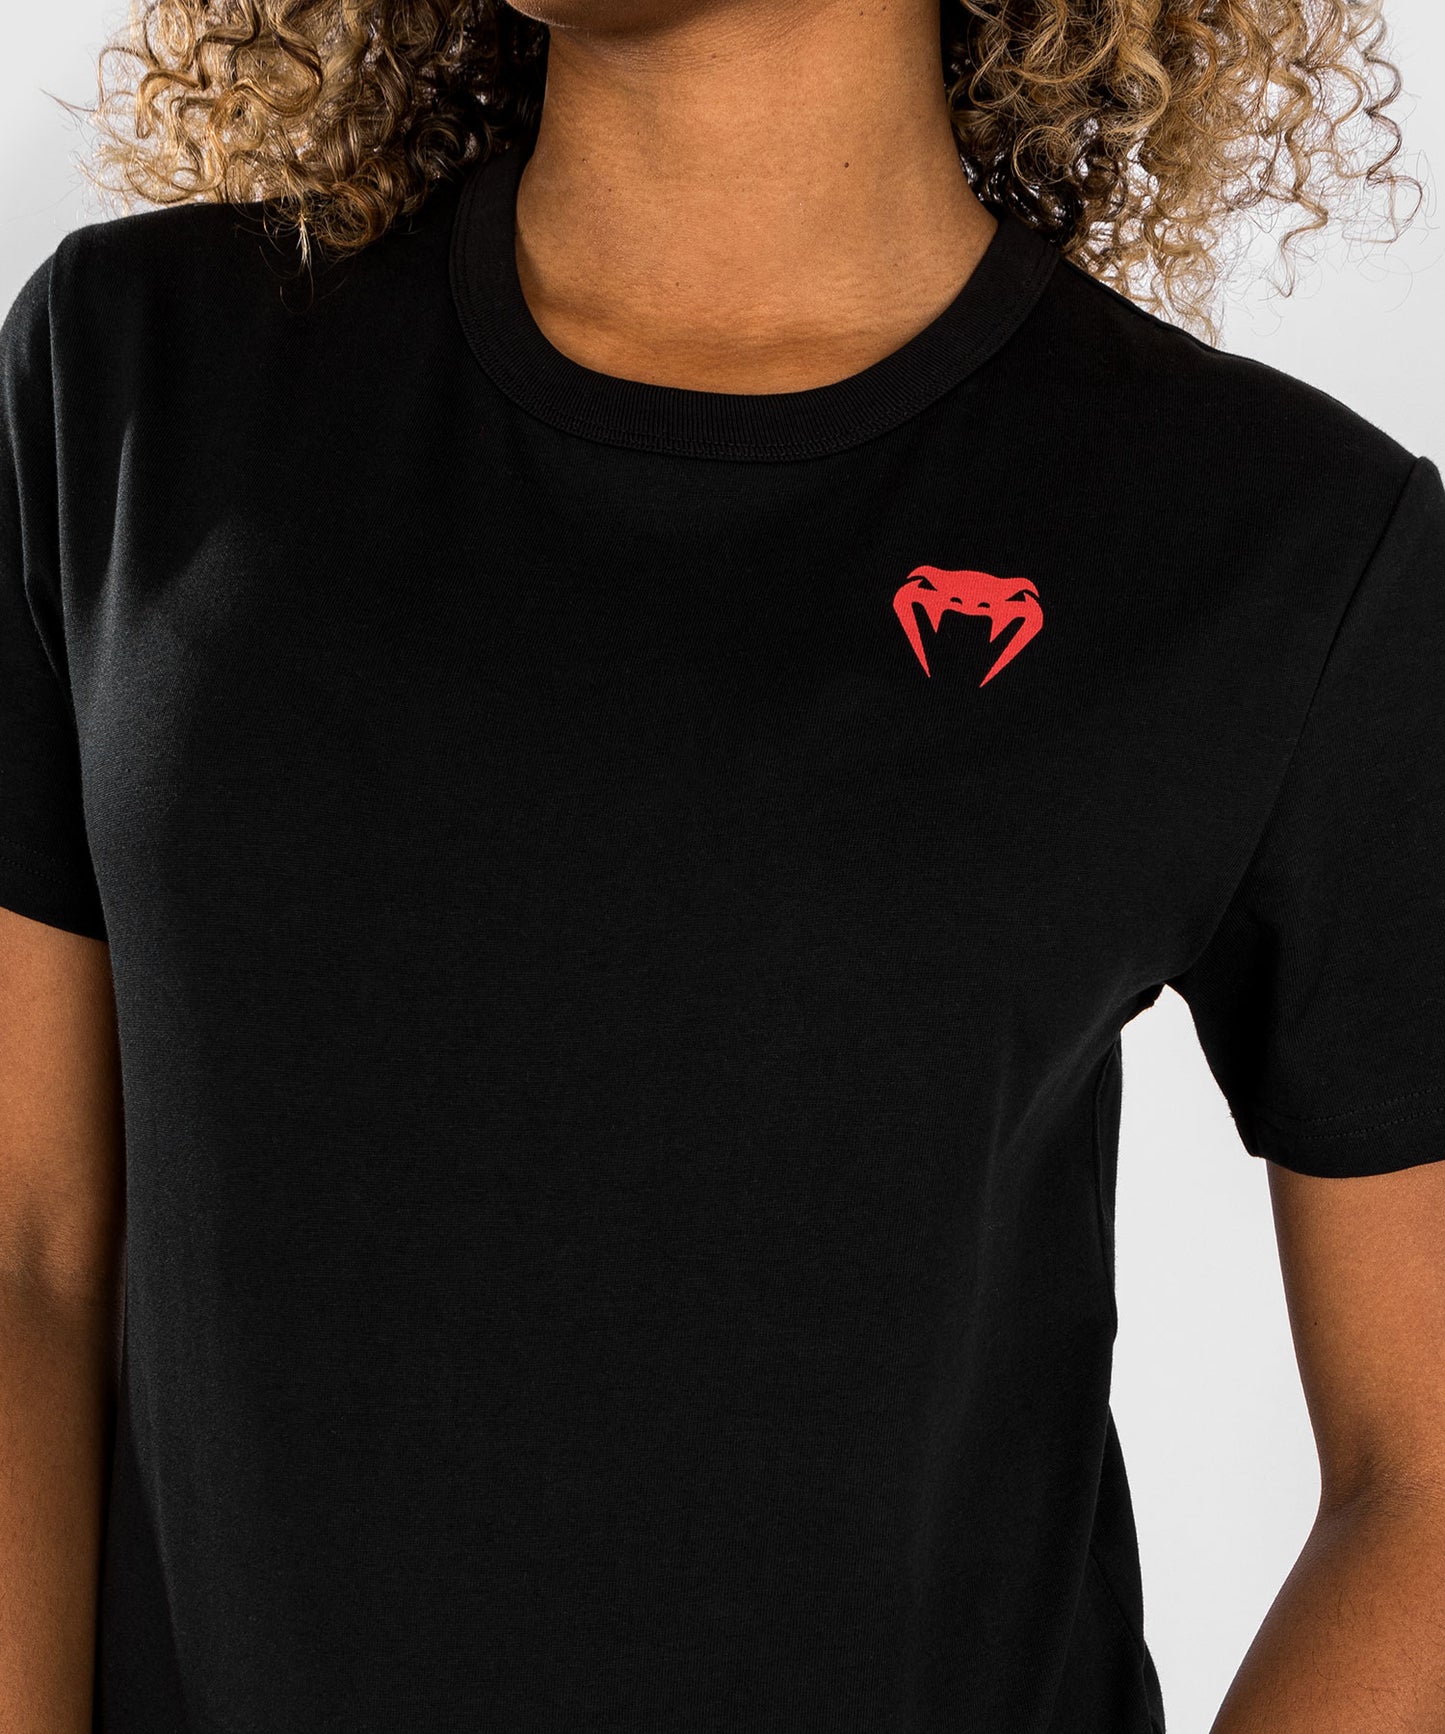 T-Shirt Femme Venum x Dodge Banshee - Noir